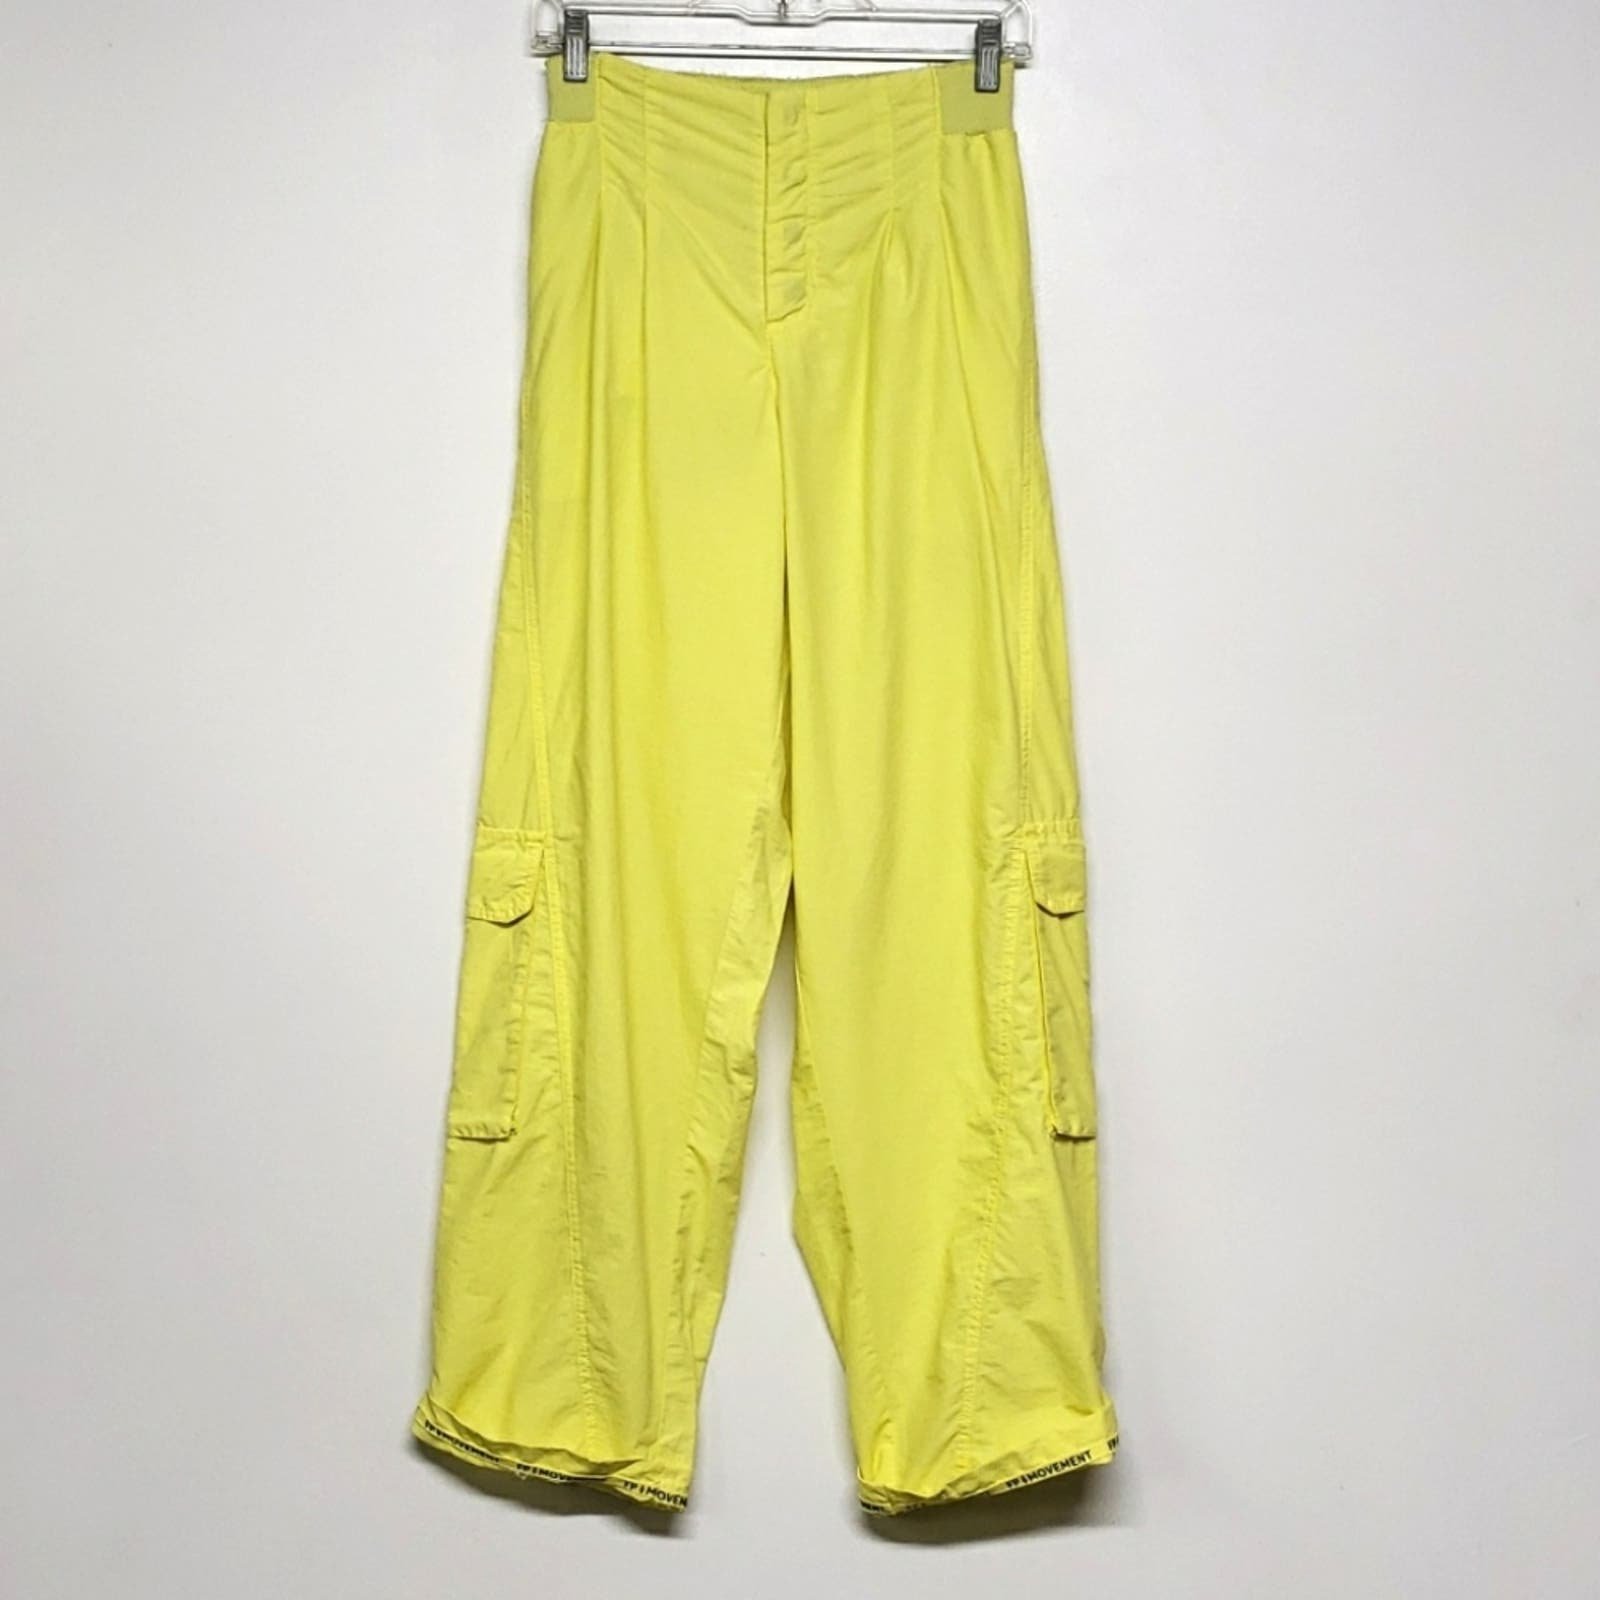 Fashion Free People Movement Mesmerize Me Solid Pants Women´s Small Outdoor Hiking Gym NIVjSUaHo Fashion